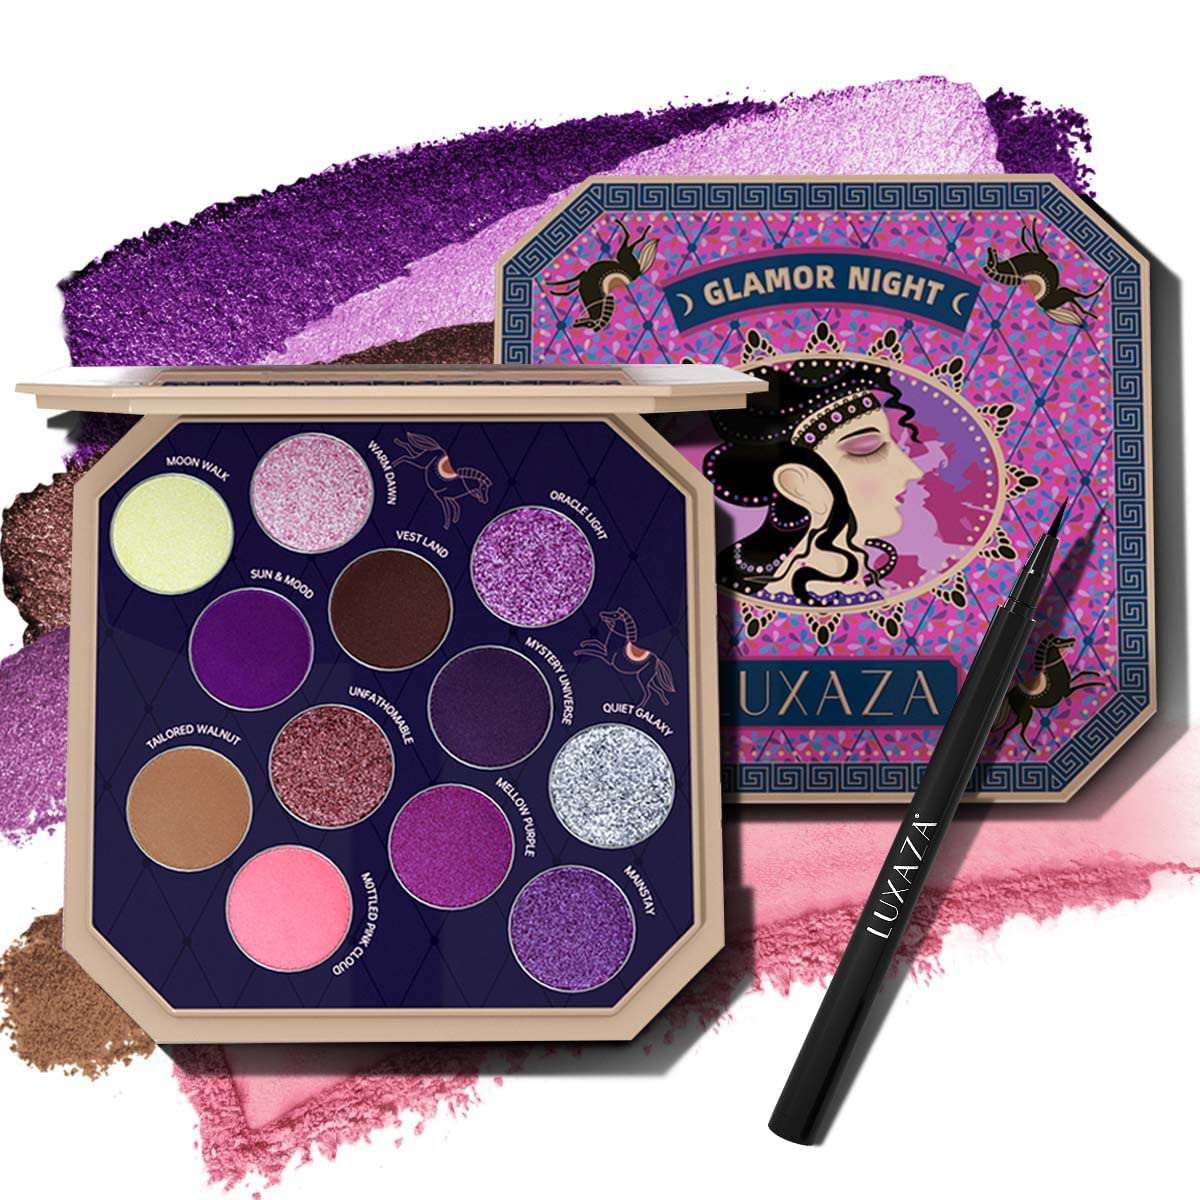 LUXAZA Glamor Night  Eyeshadow Palette Purples 12 Colors Matte & Shimmer & Glitter